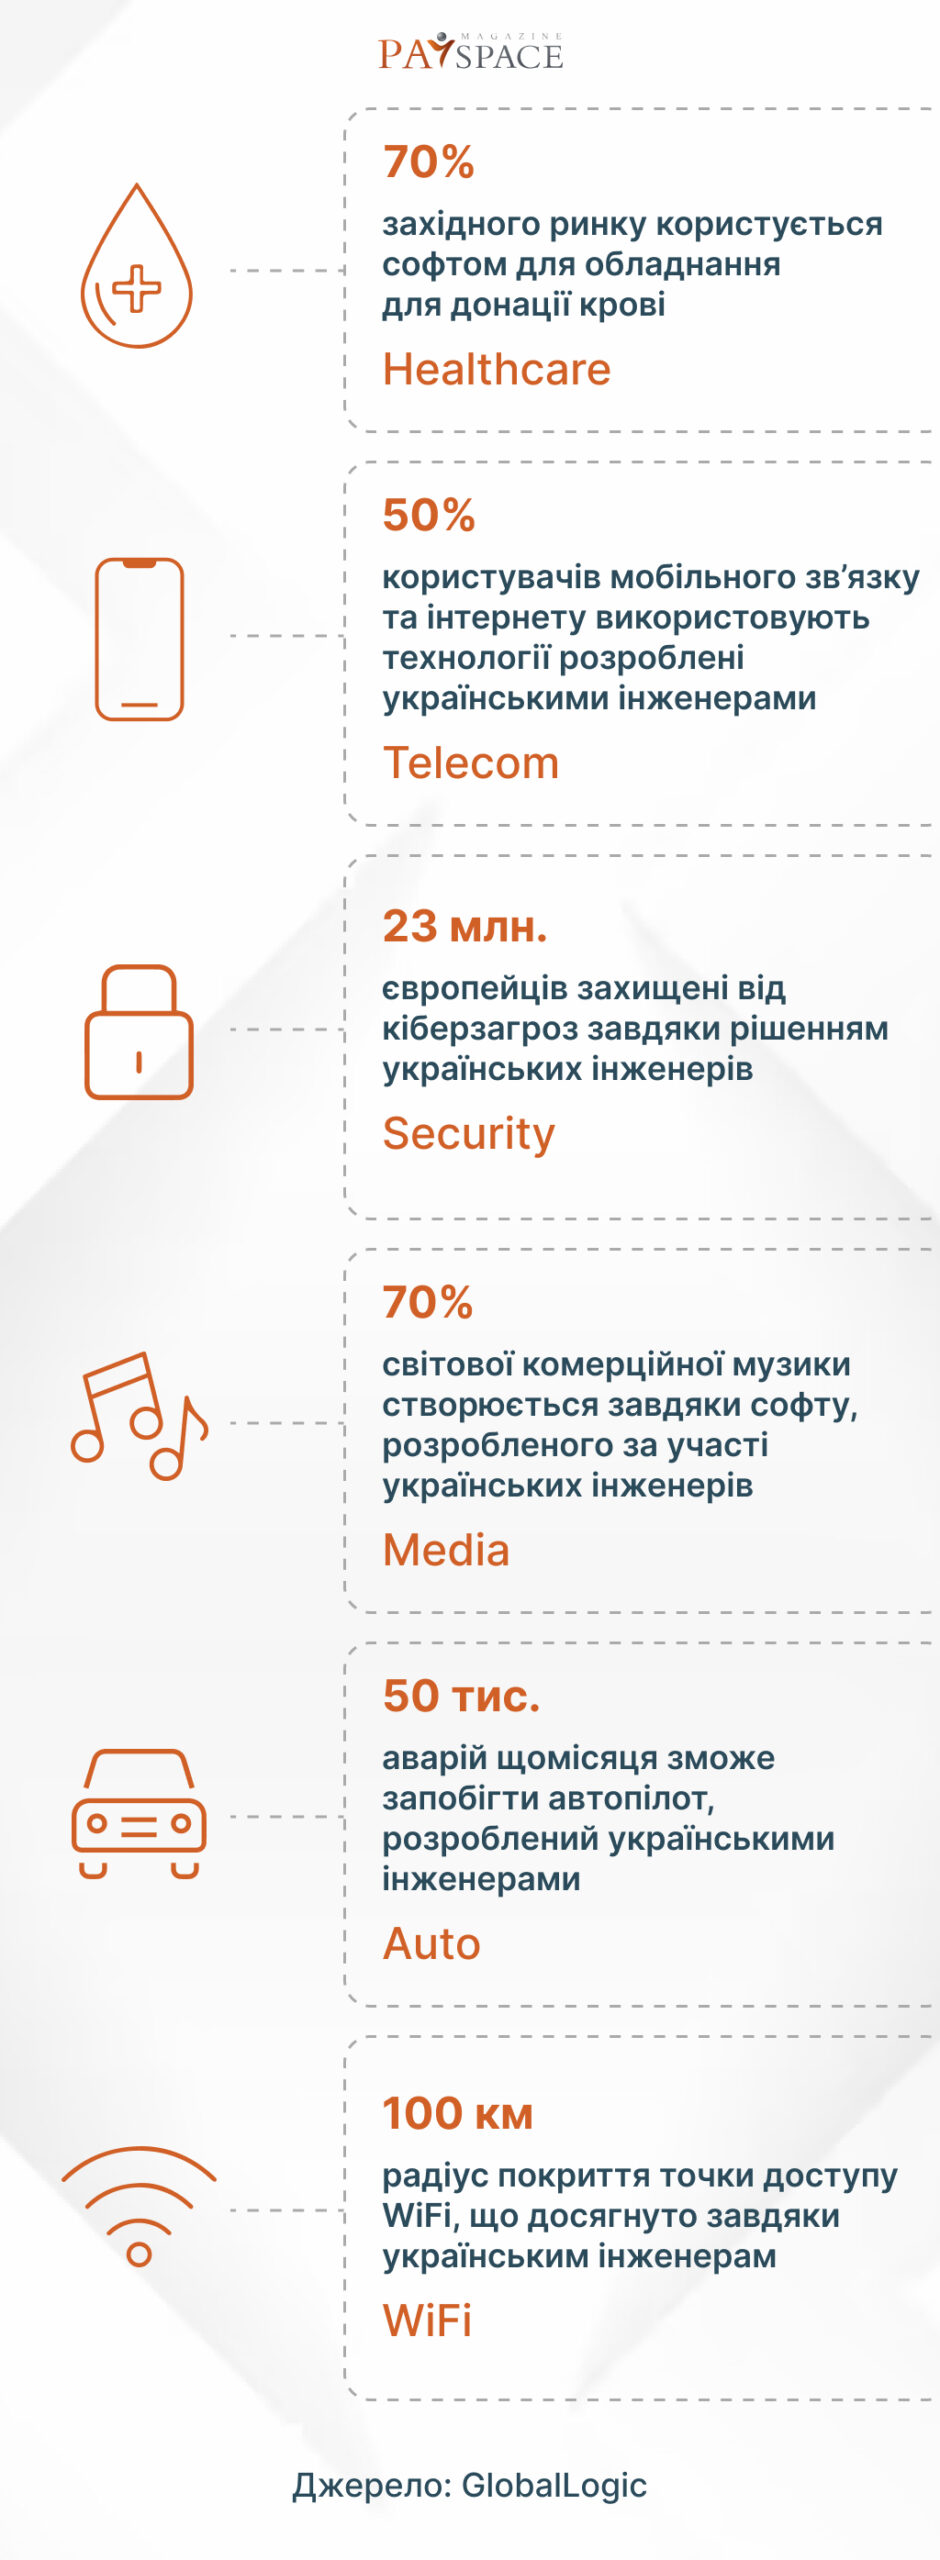 Top Ukrainian technologies